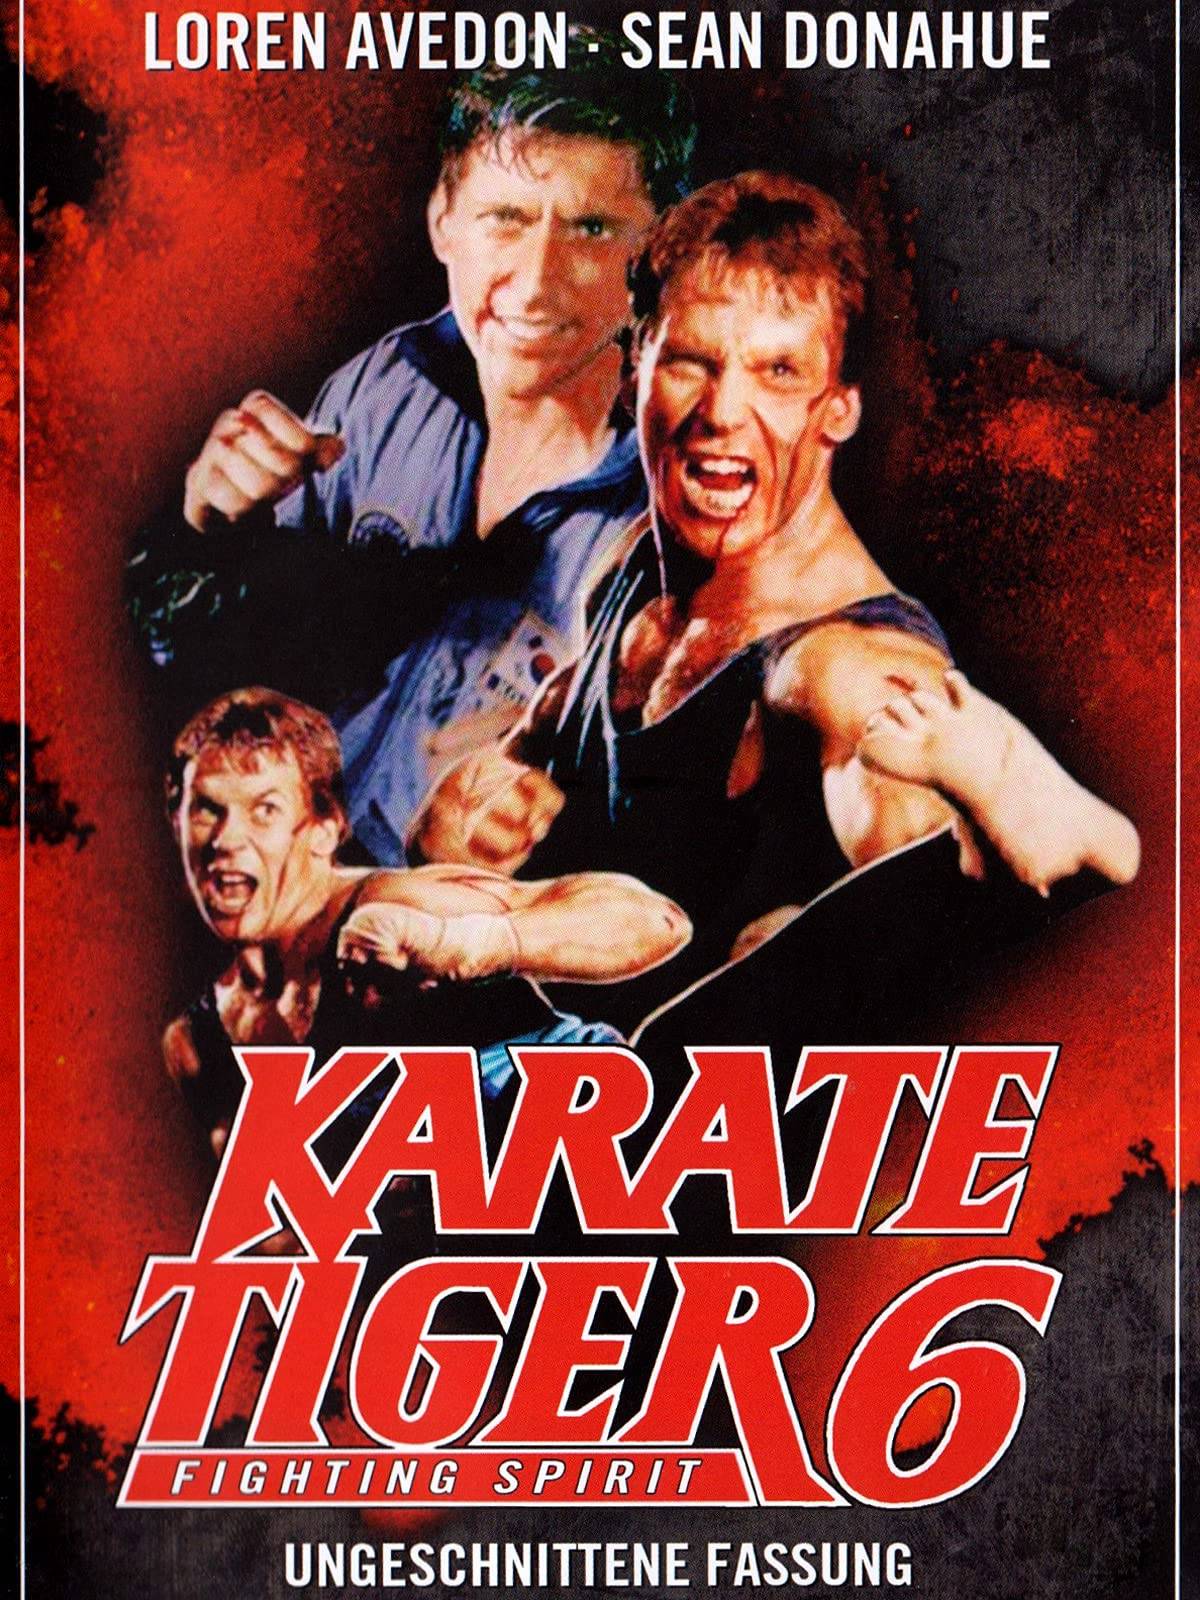 Karate Tiger 6.jpg